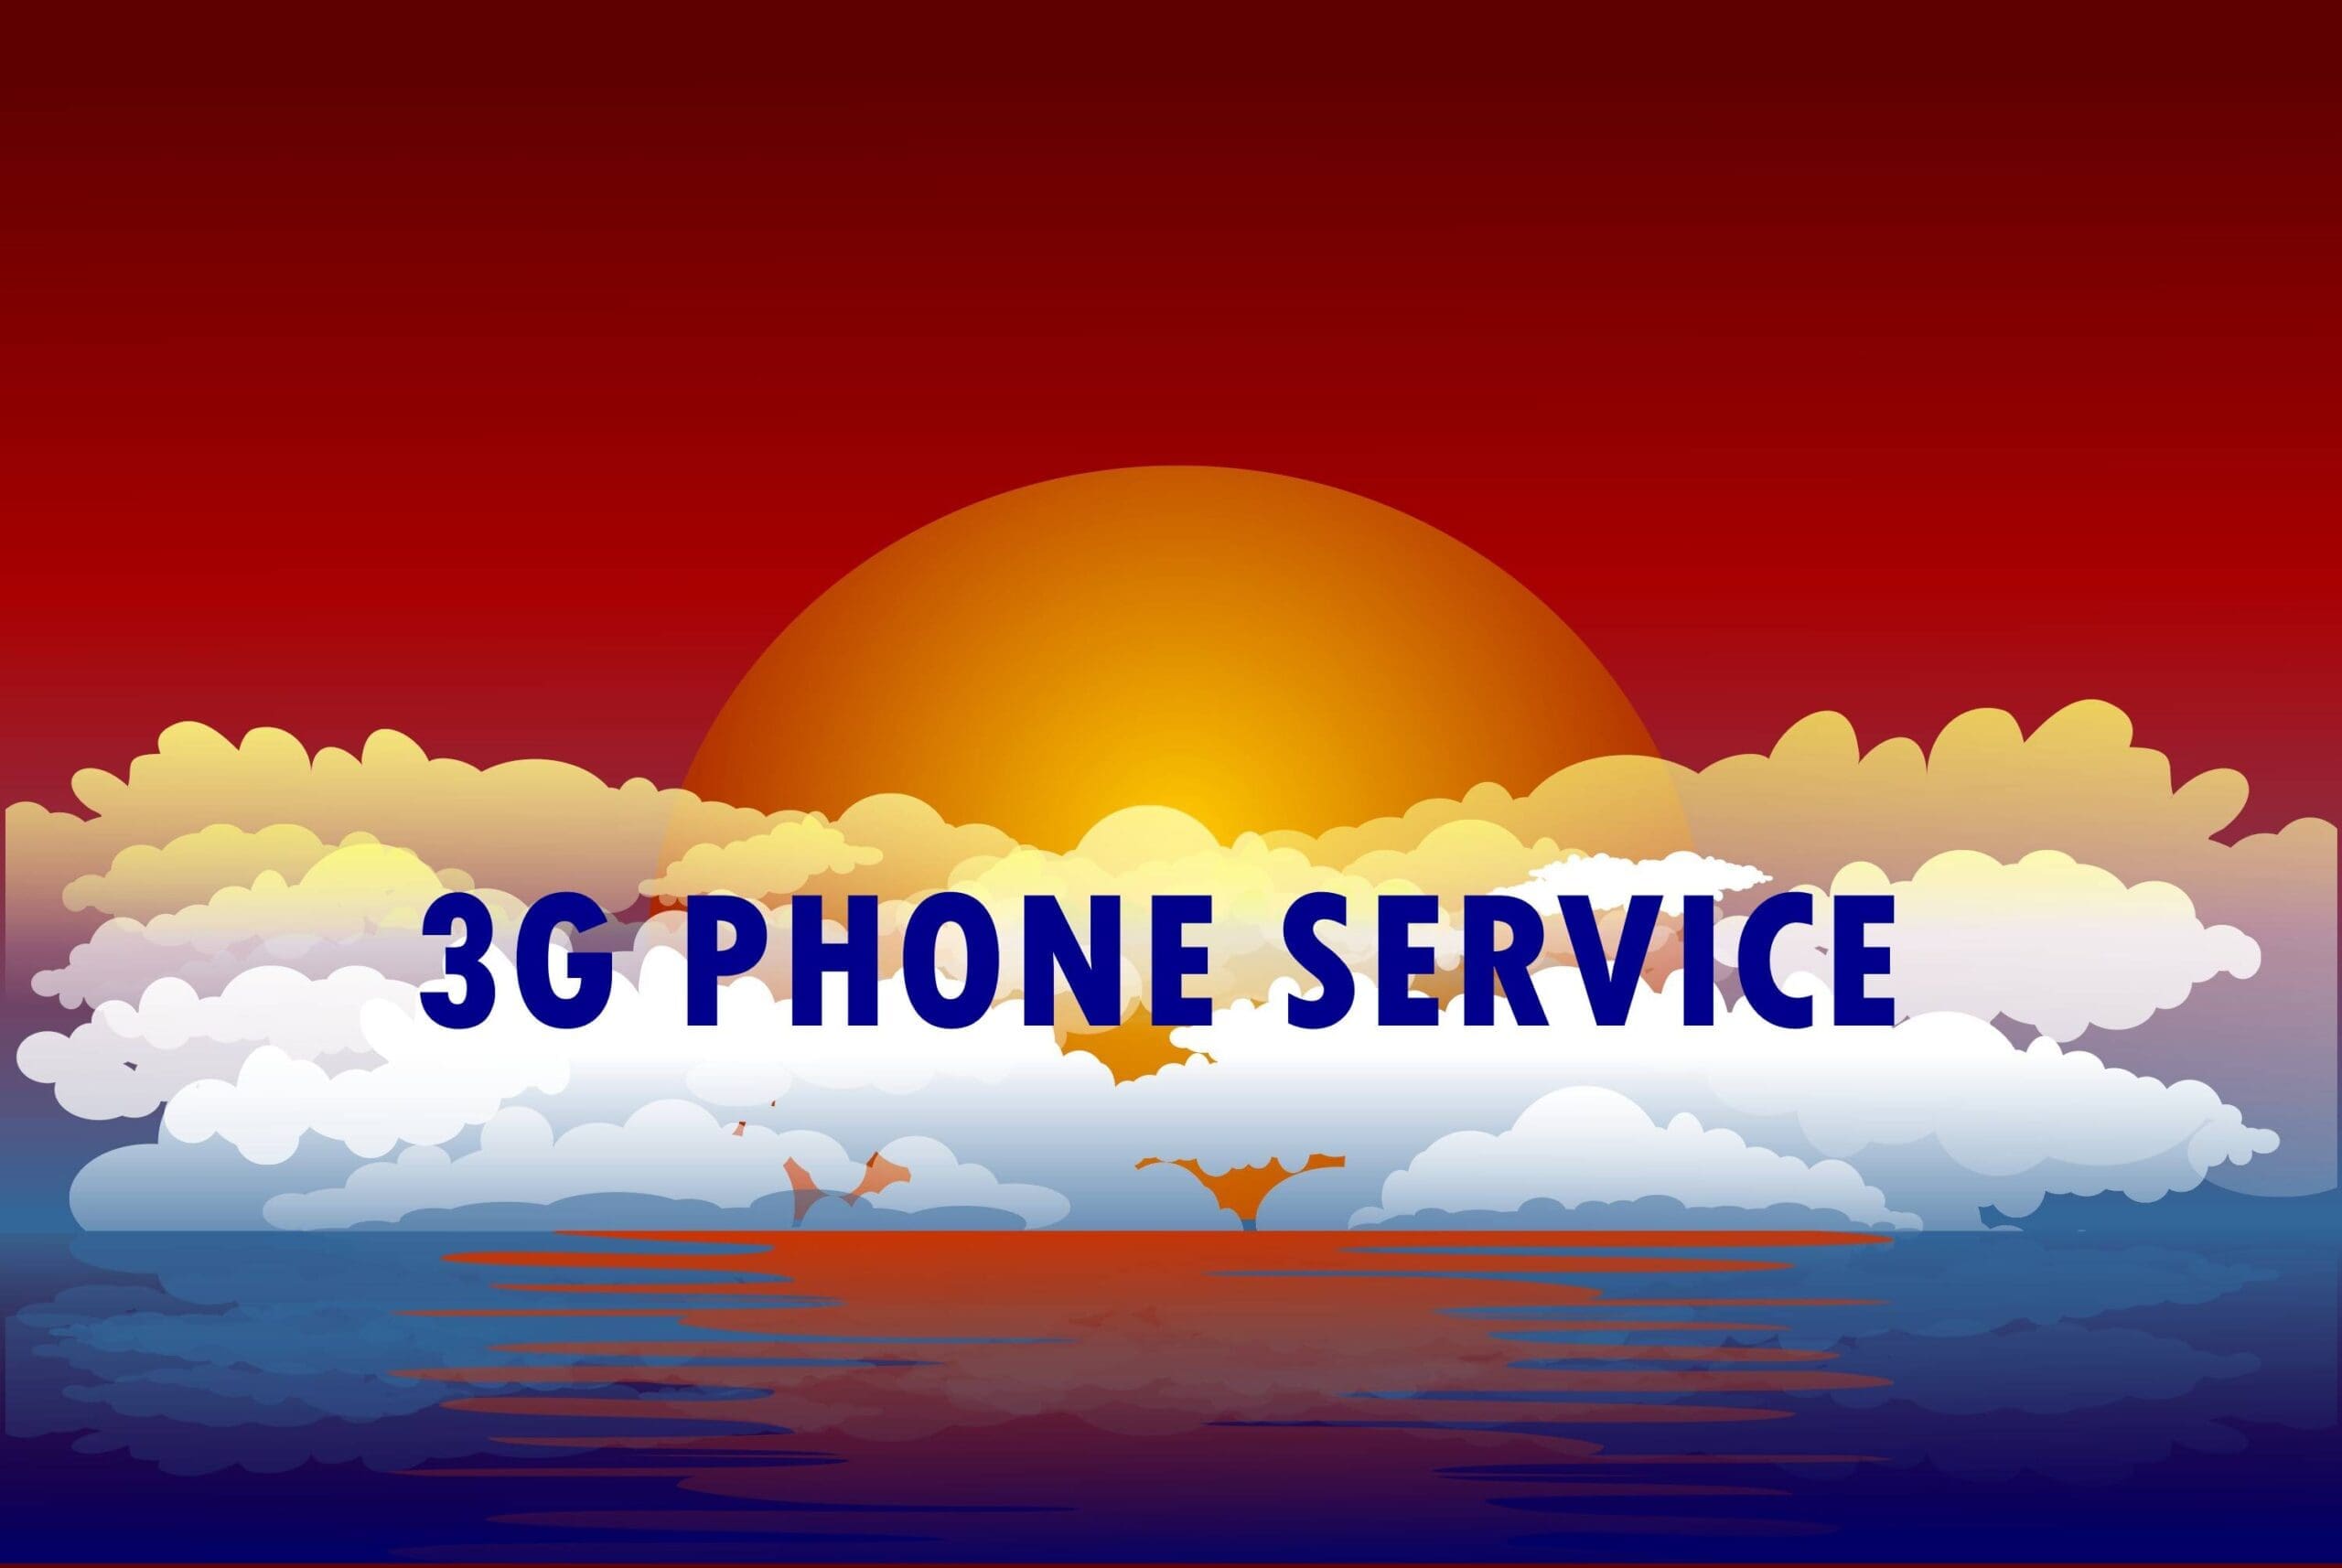 3G Phone Service Sunset